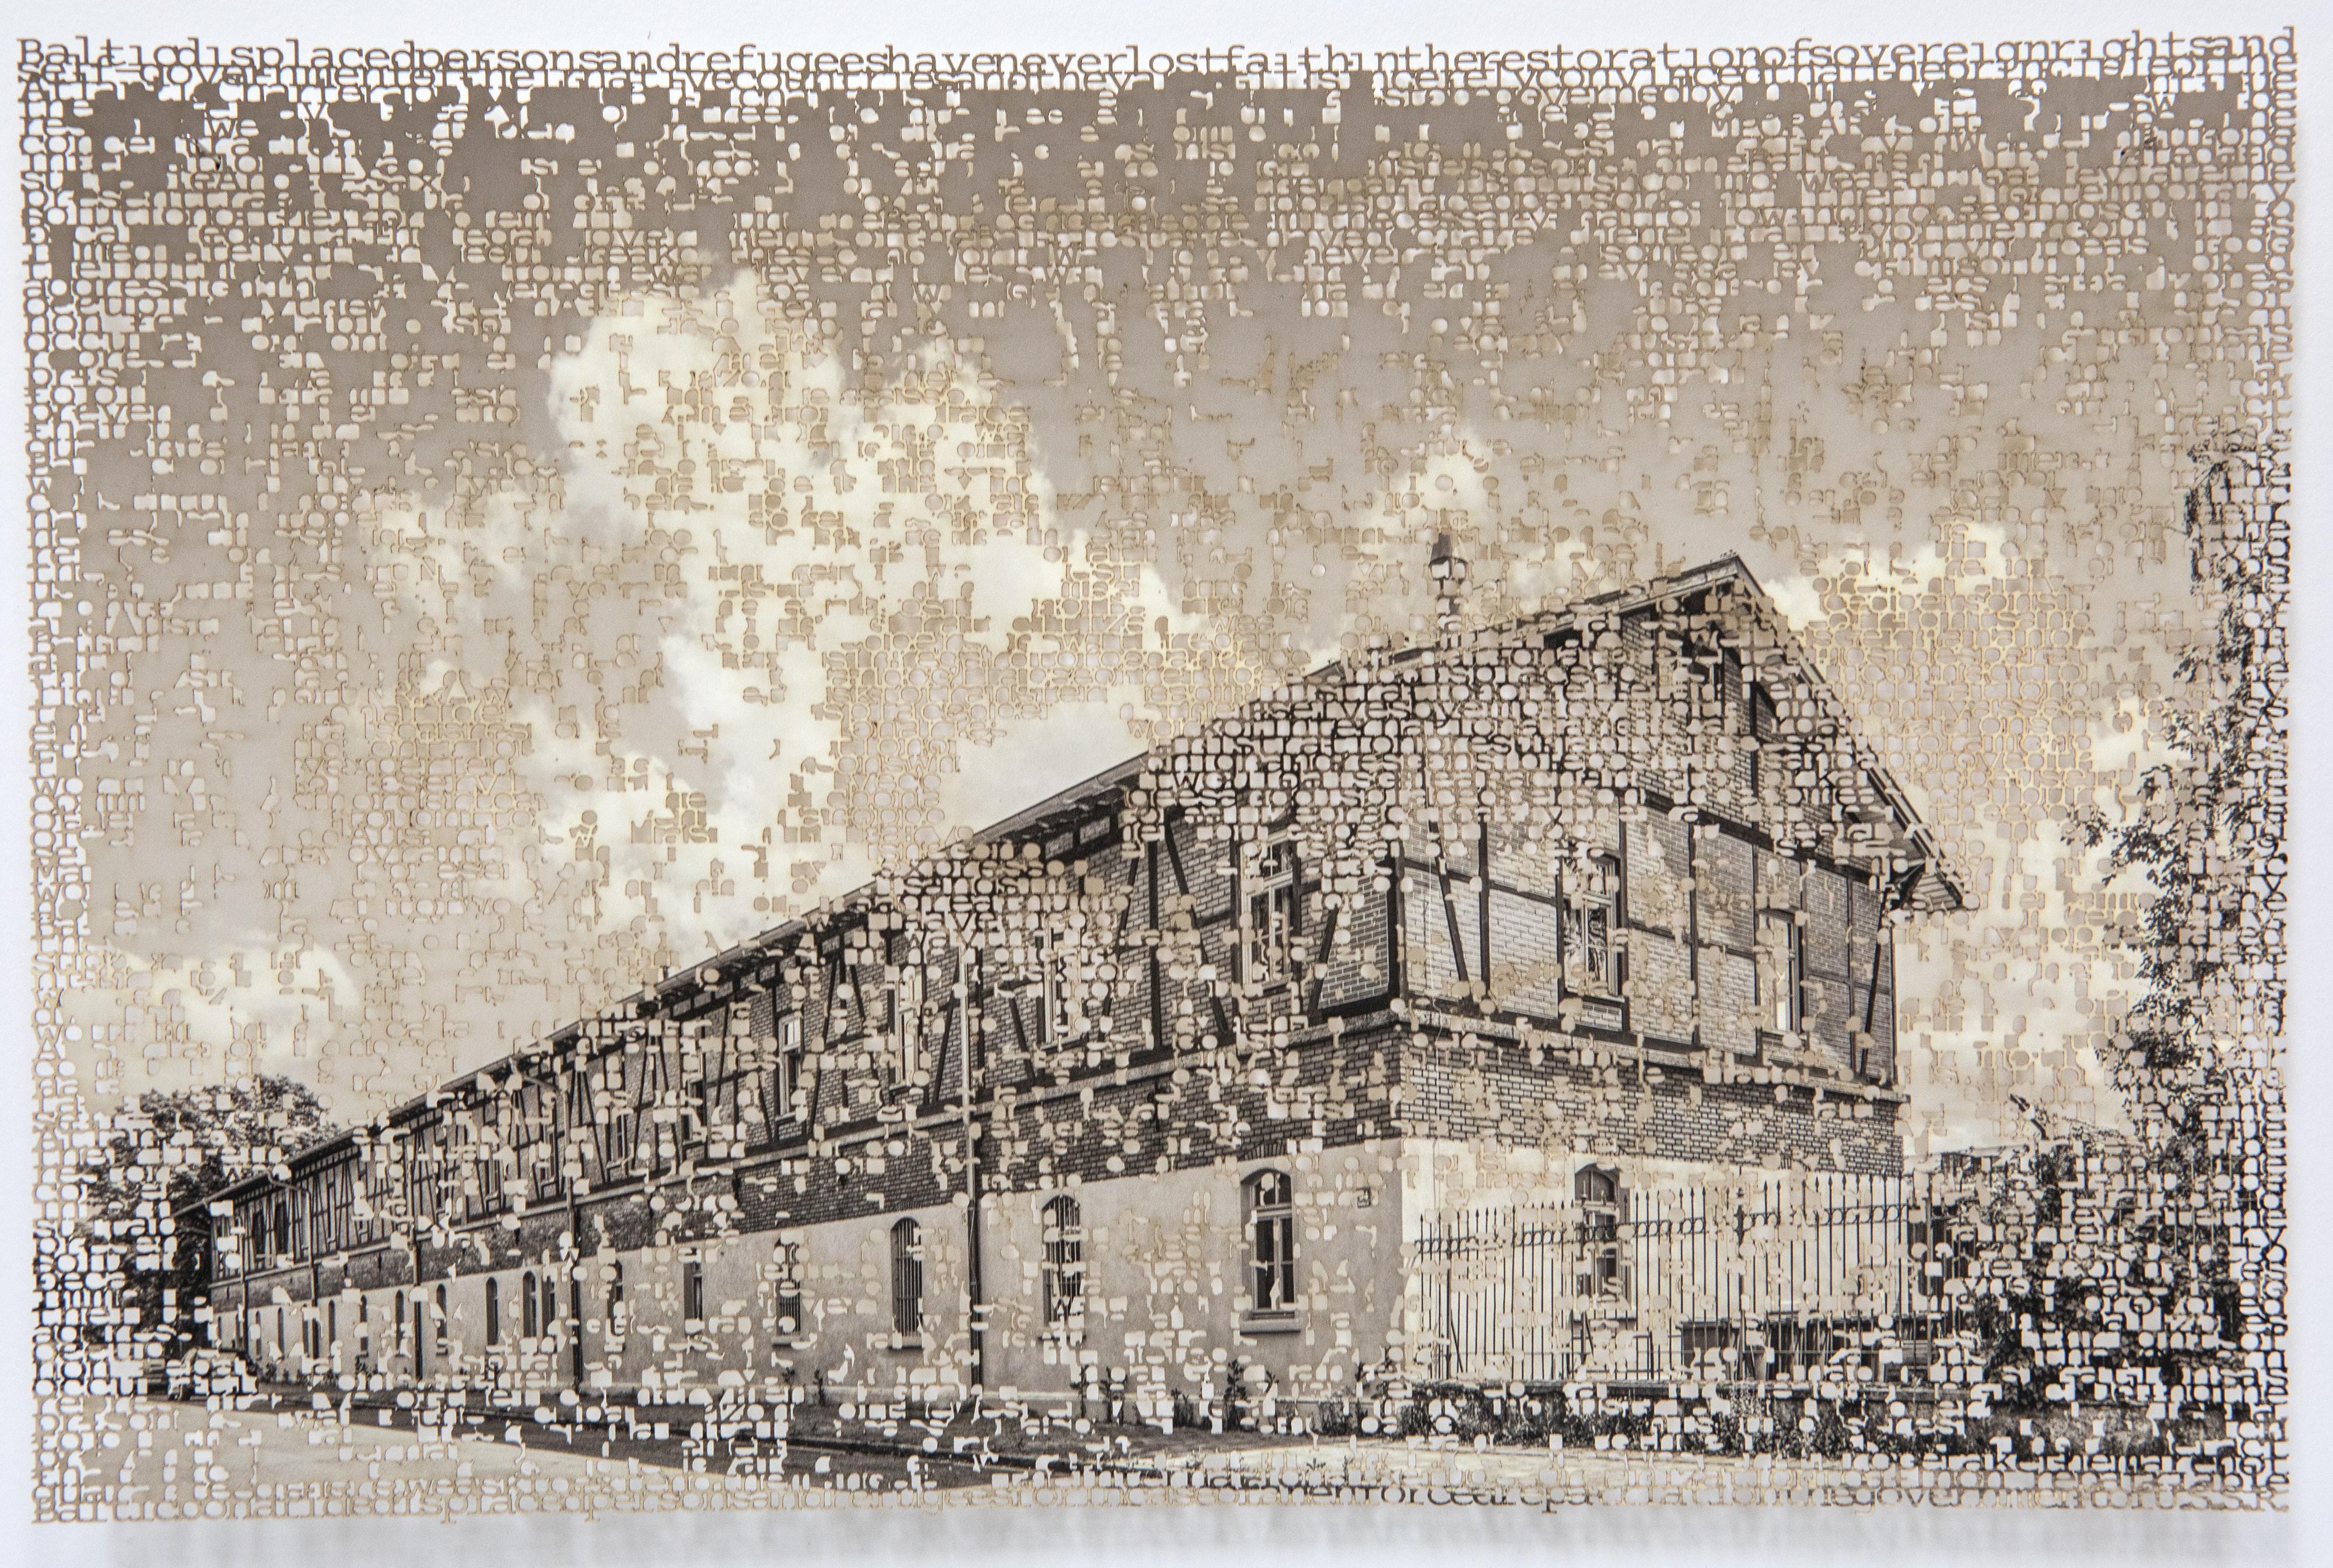 Krista Svalbonas Black and White Photograph - Erlangen 1, Laser cut archival pigment ink print, signed, numbered, framed 